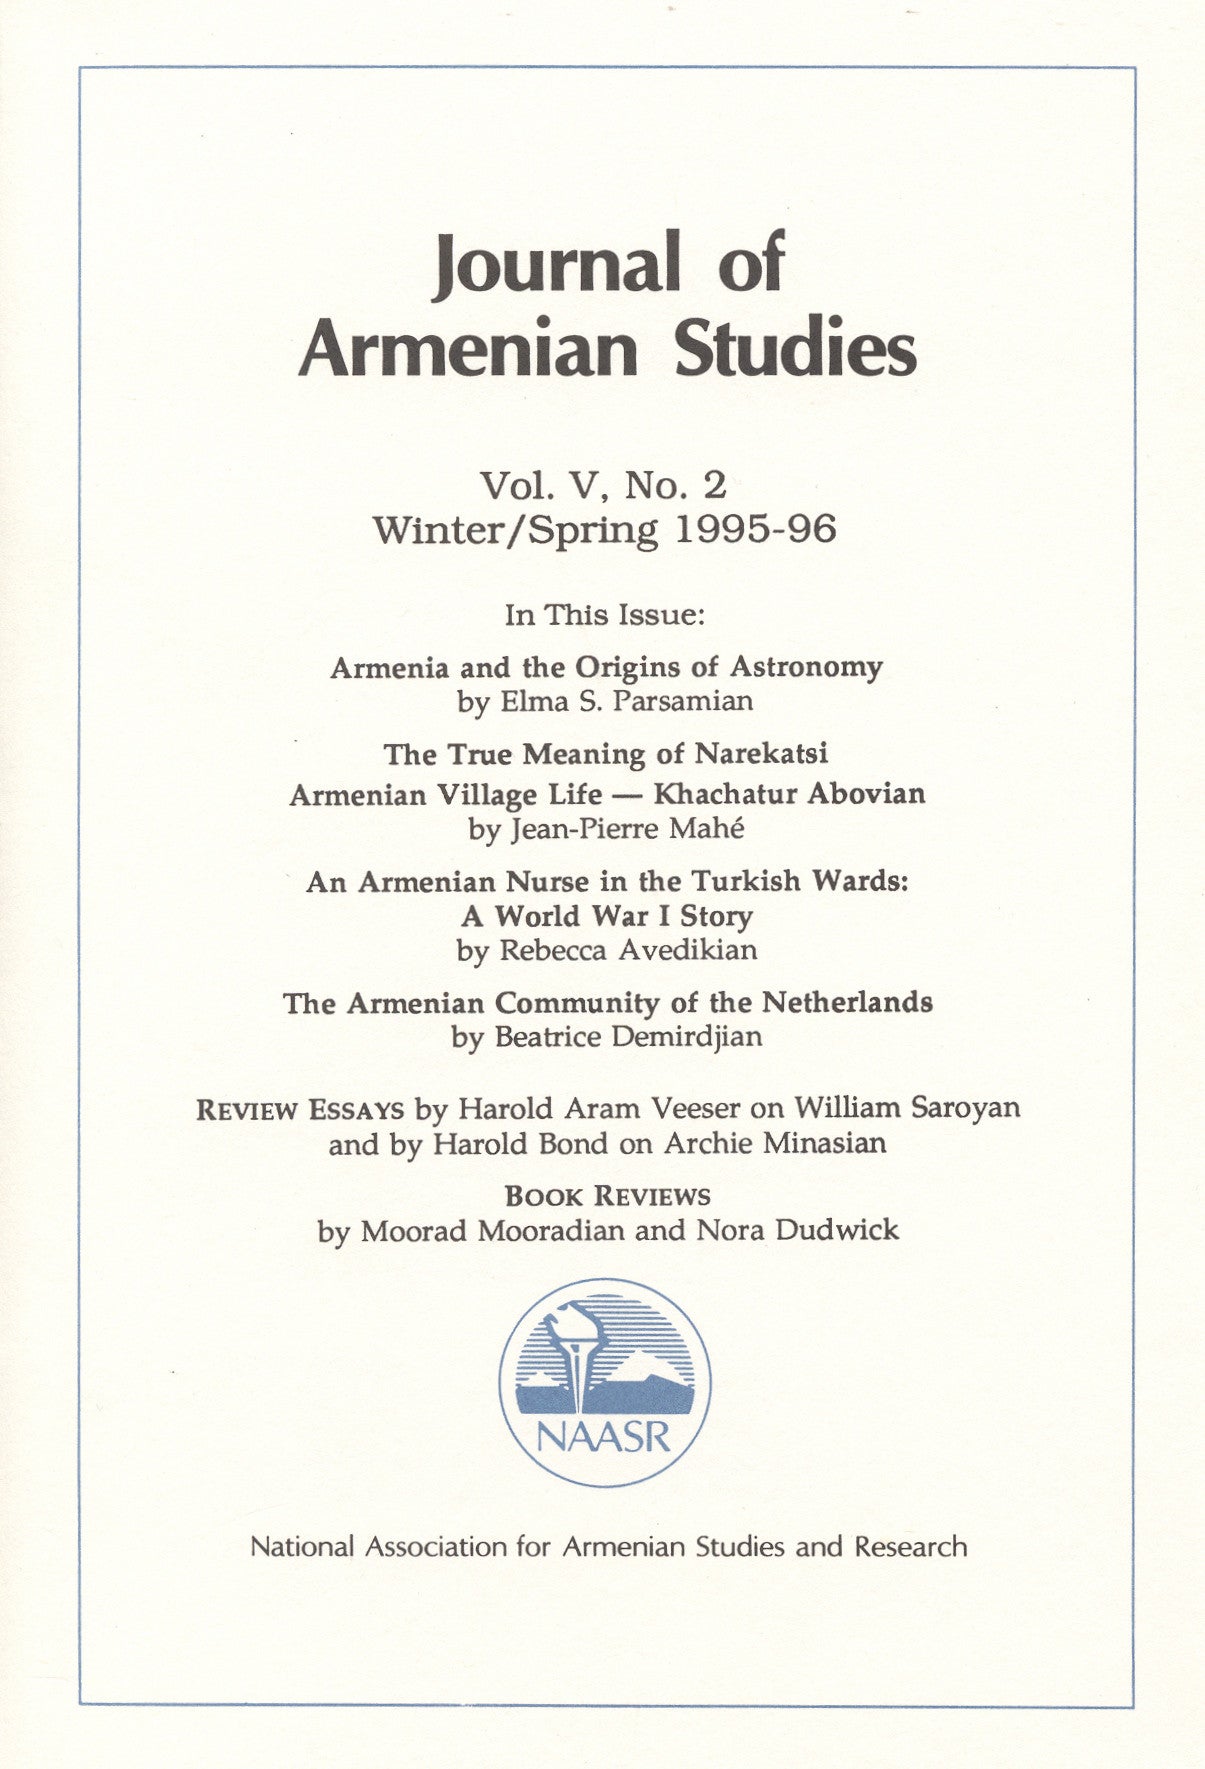 JOURNAL OF ARMENIAN STUDIES: Volume V, Number 2: Winter/Spring 1995-96